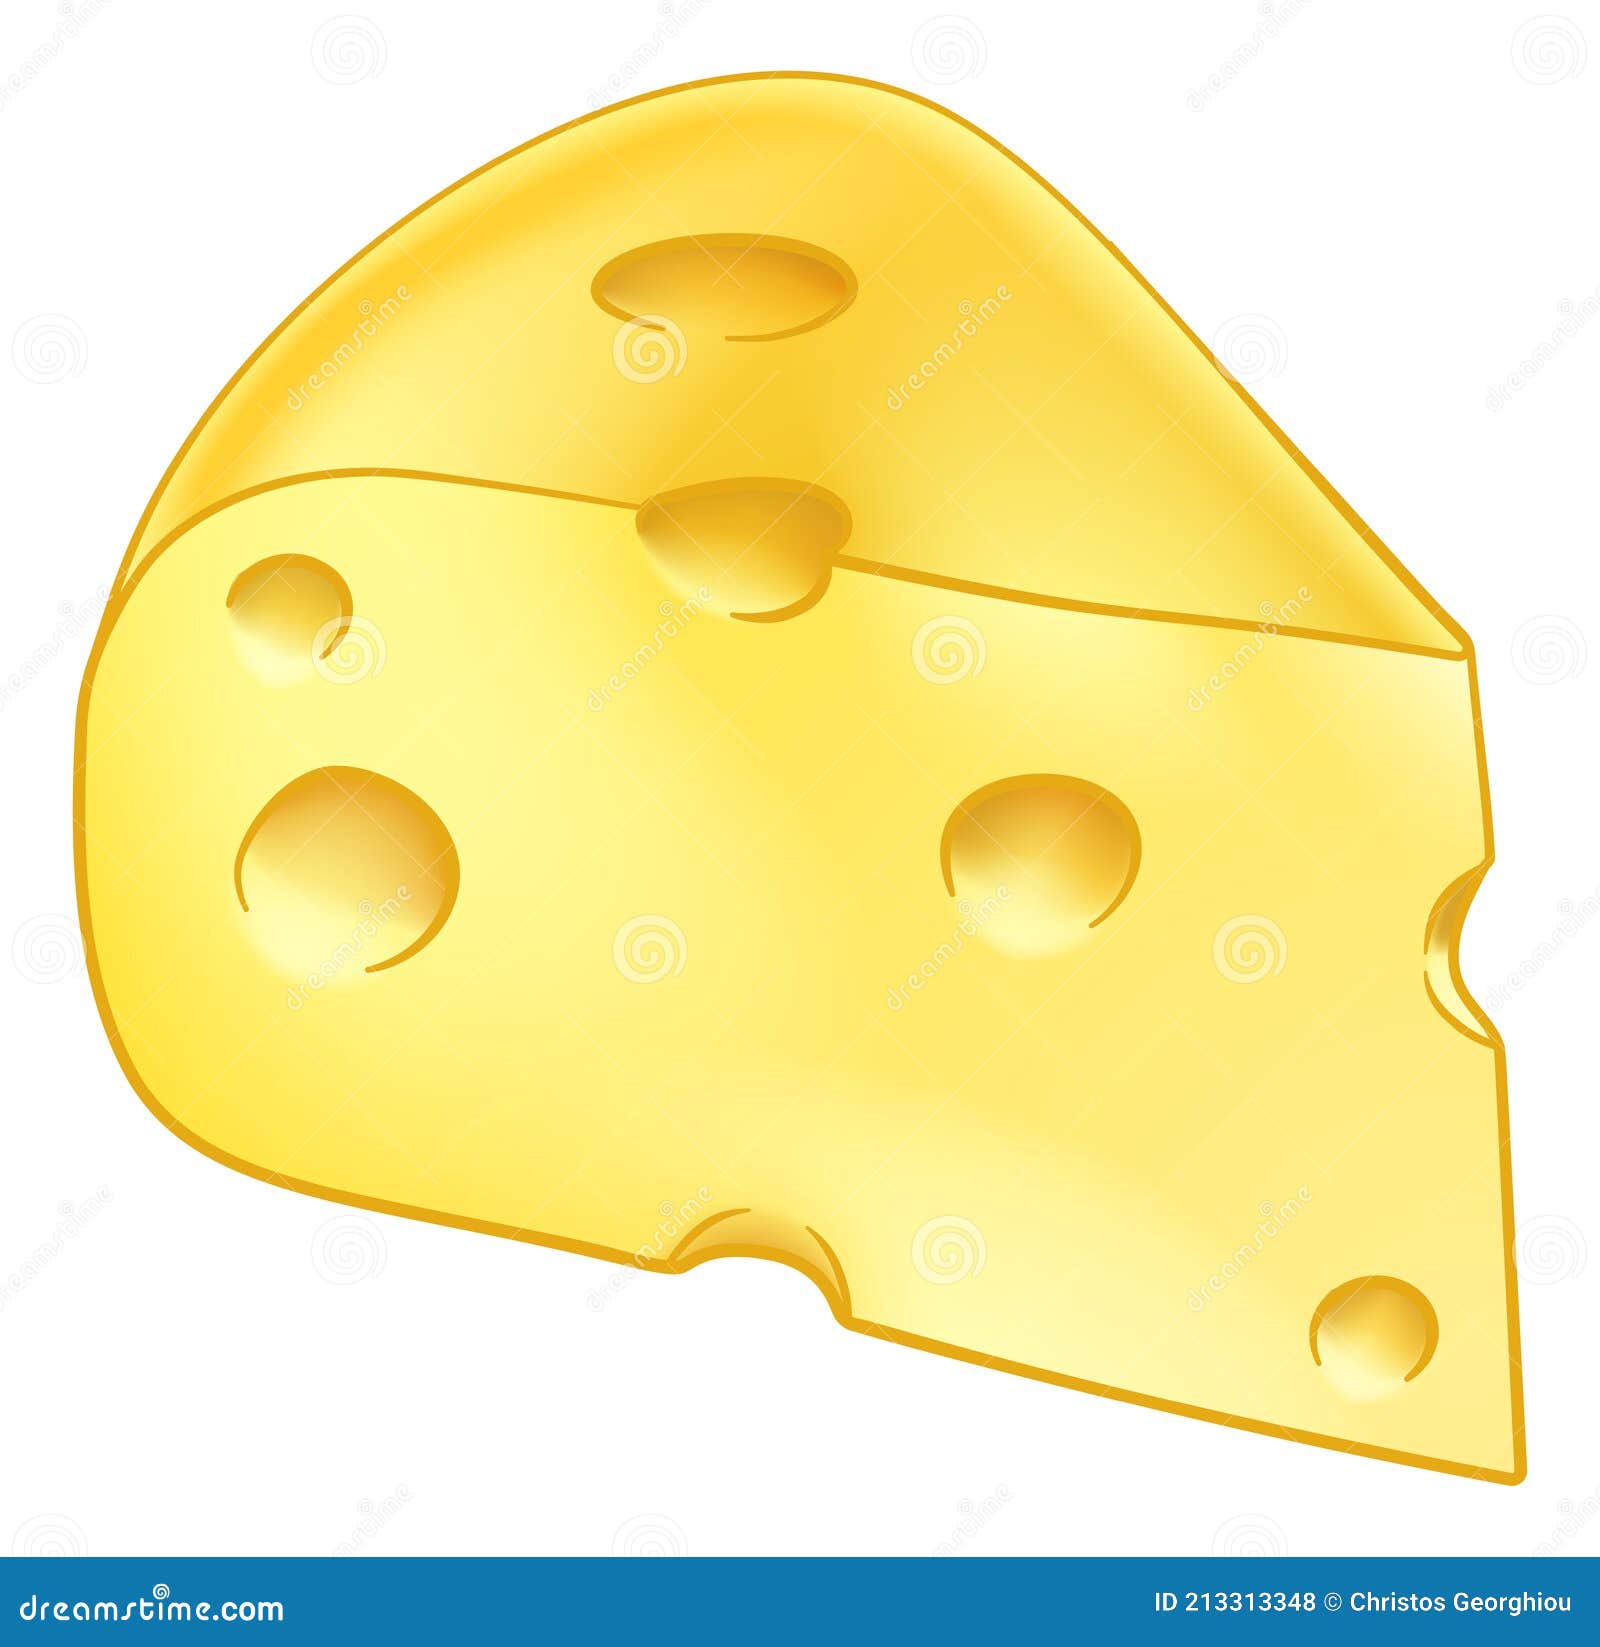 Swiss Cheese Cartoon Illustration Stock Vector - Illustration of triangle,  food: 213313348